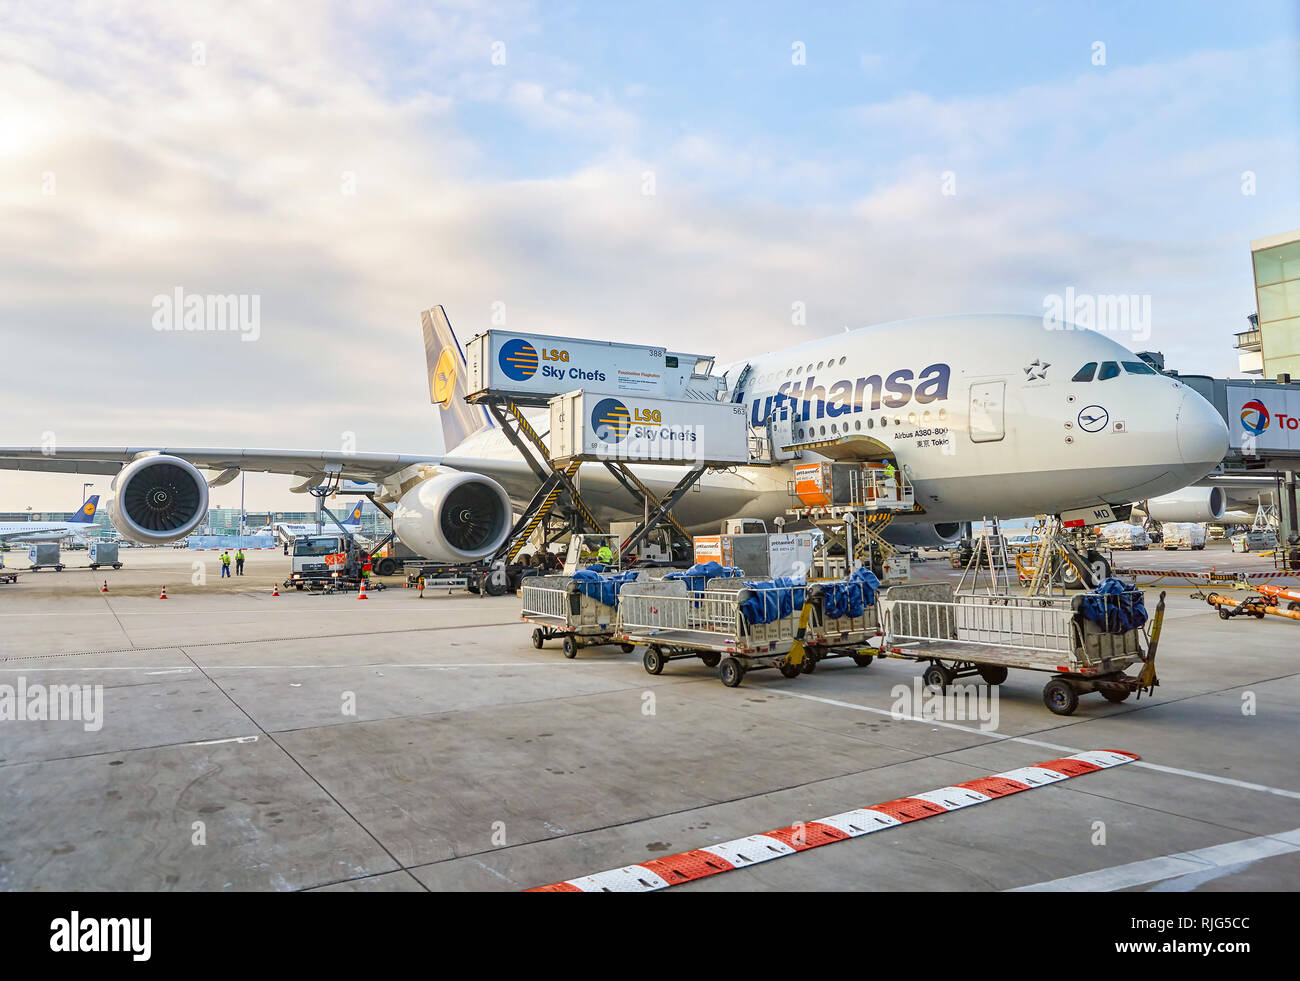 FRANKFURT, GERMANY - CIRCA MARCH 2016: Lufthansa Airbus A380 docked in Frankfurt Airport. Frankfurt Airport is a major international airport located i Stock Photo